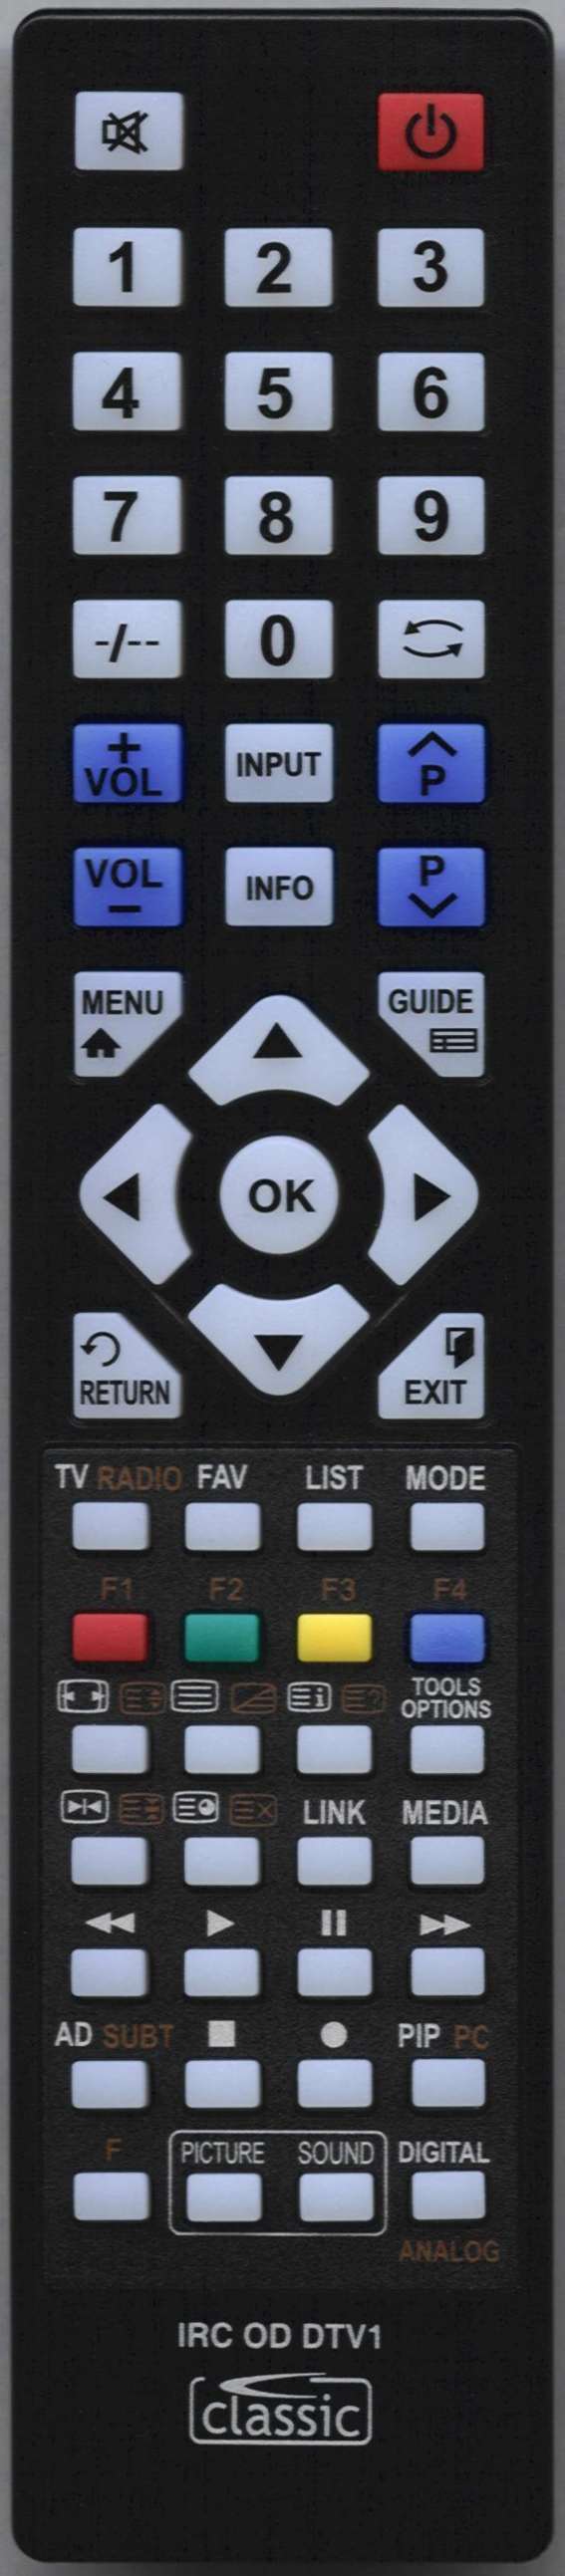 PANASONIC TX26LXD60 Remote Control Alternative